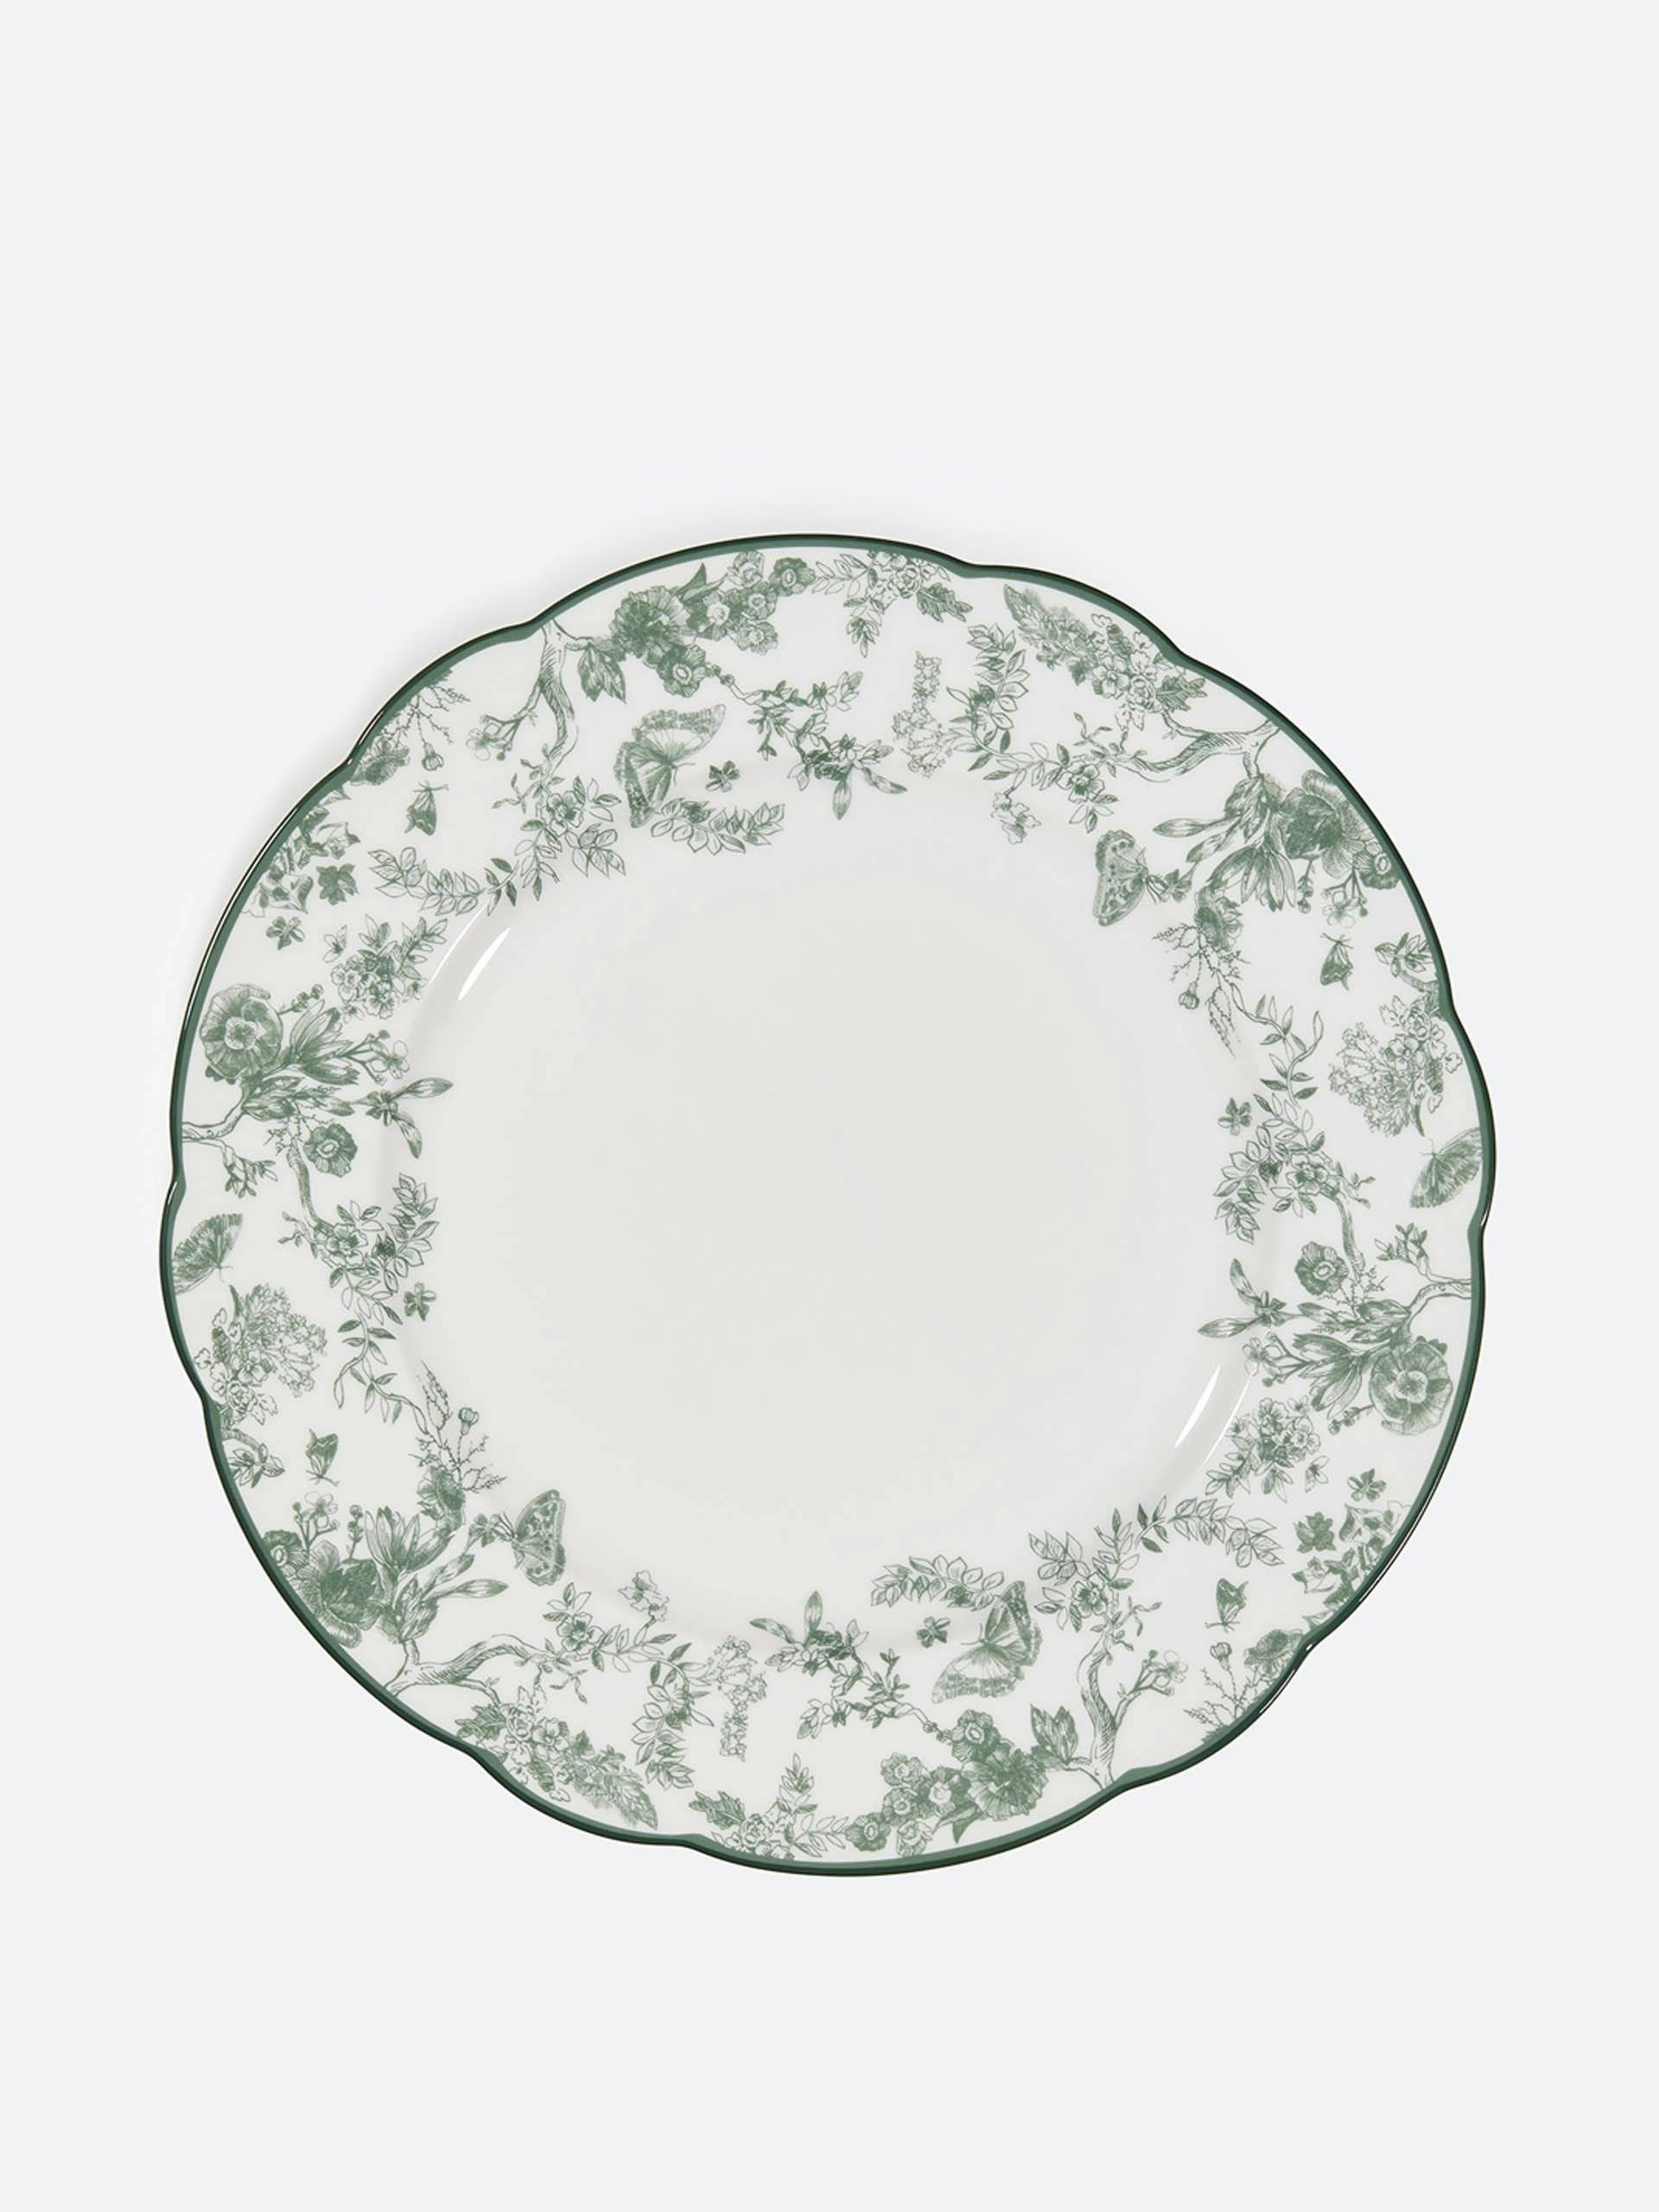 Linden Green Toile de Jouy porcelain dinner plate